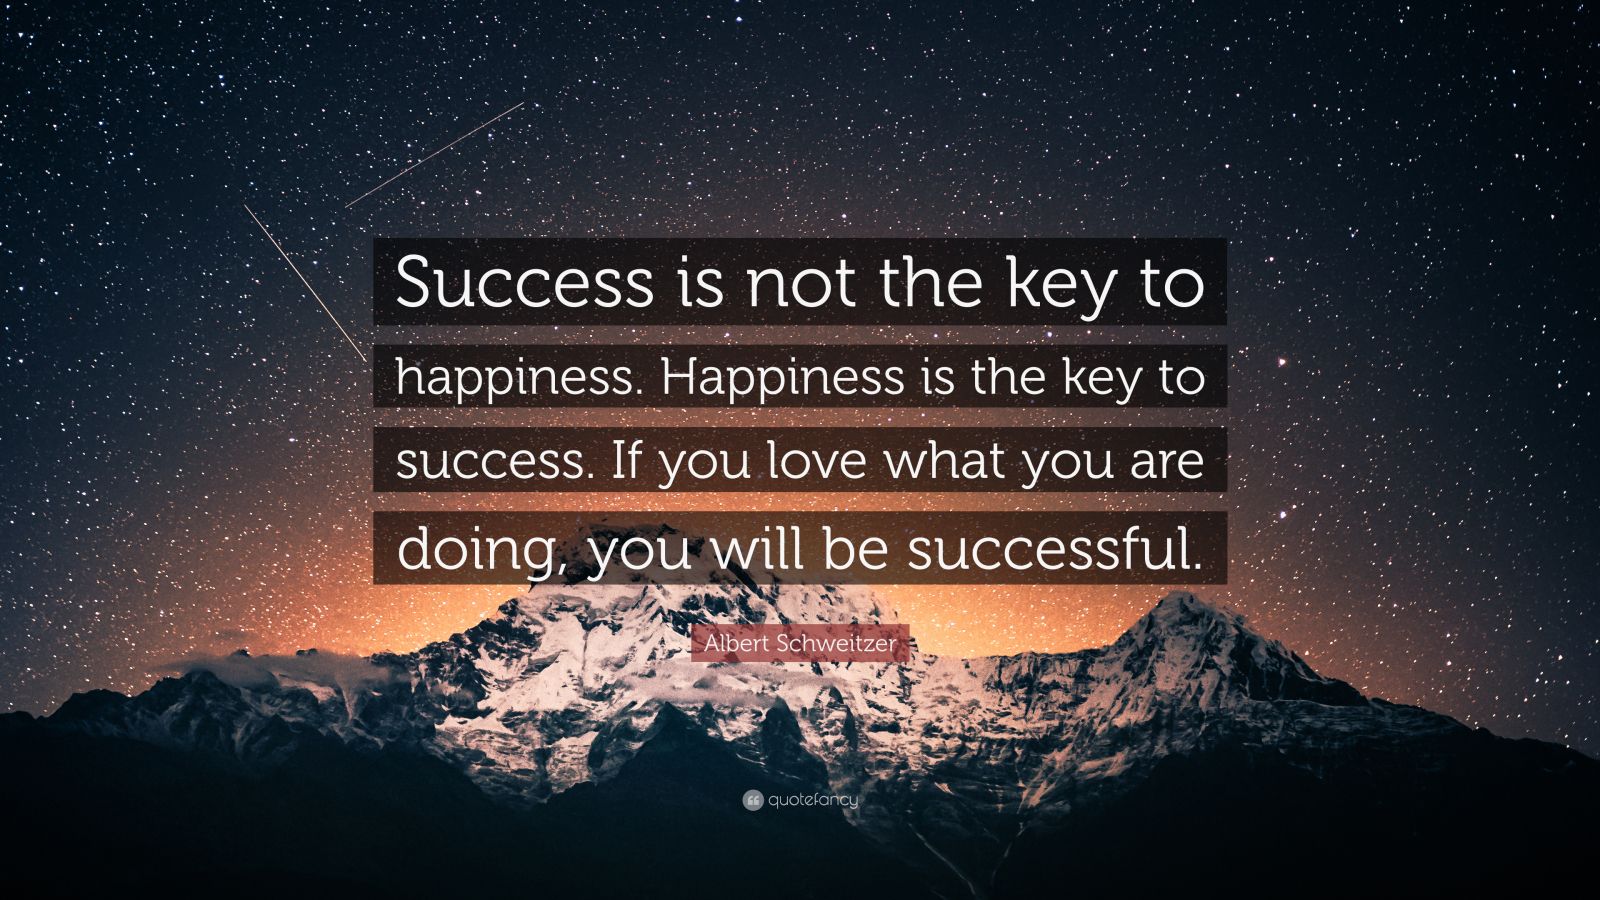 Albert Schweitzer Quote: “Success is not the key to happiness